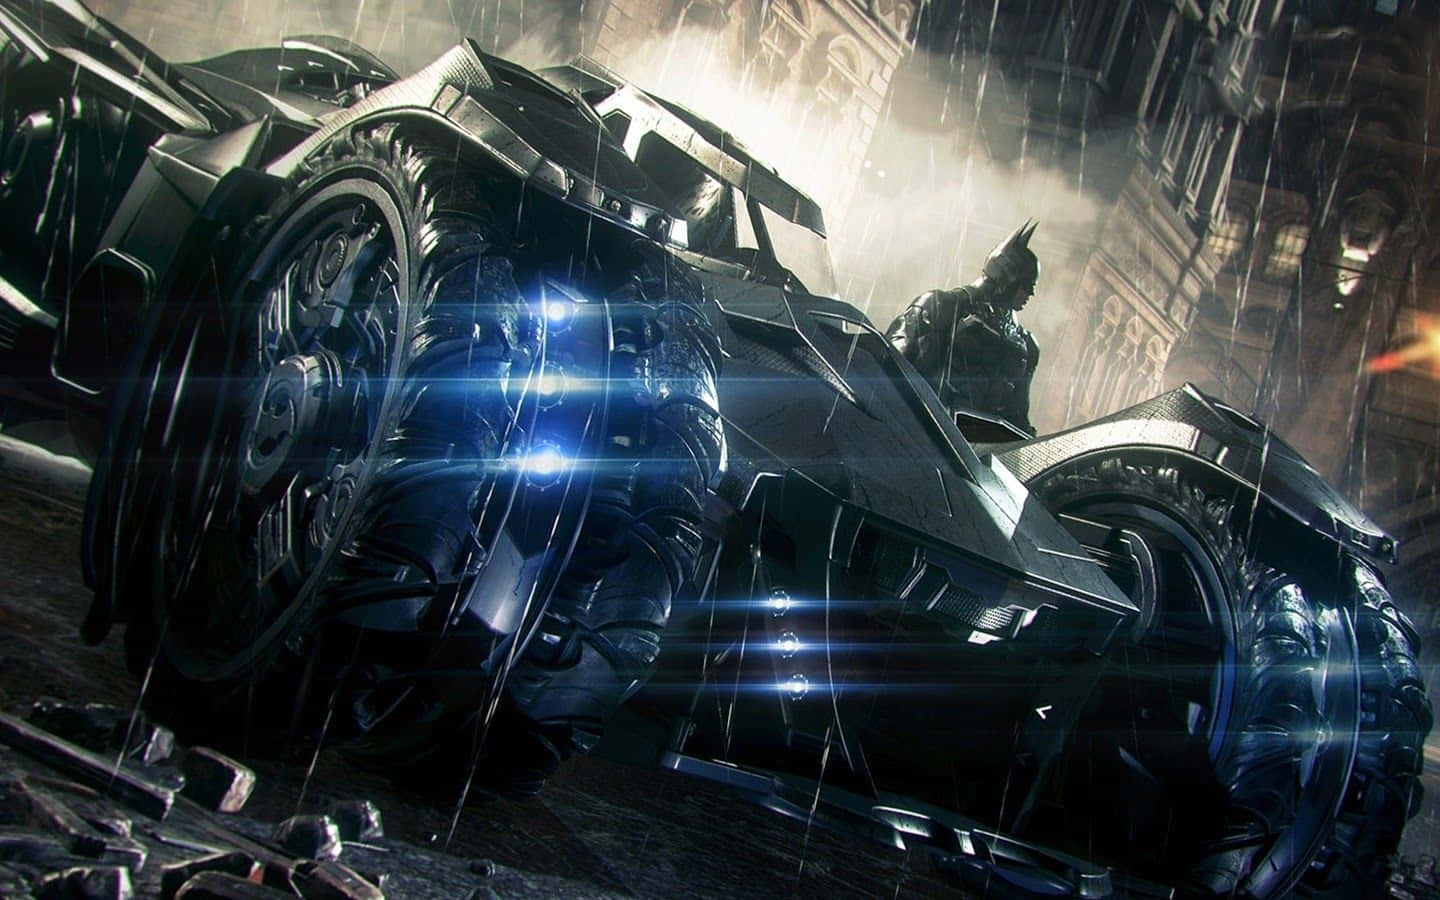 Batman Monster Car Rain Wallpaper